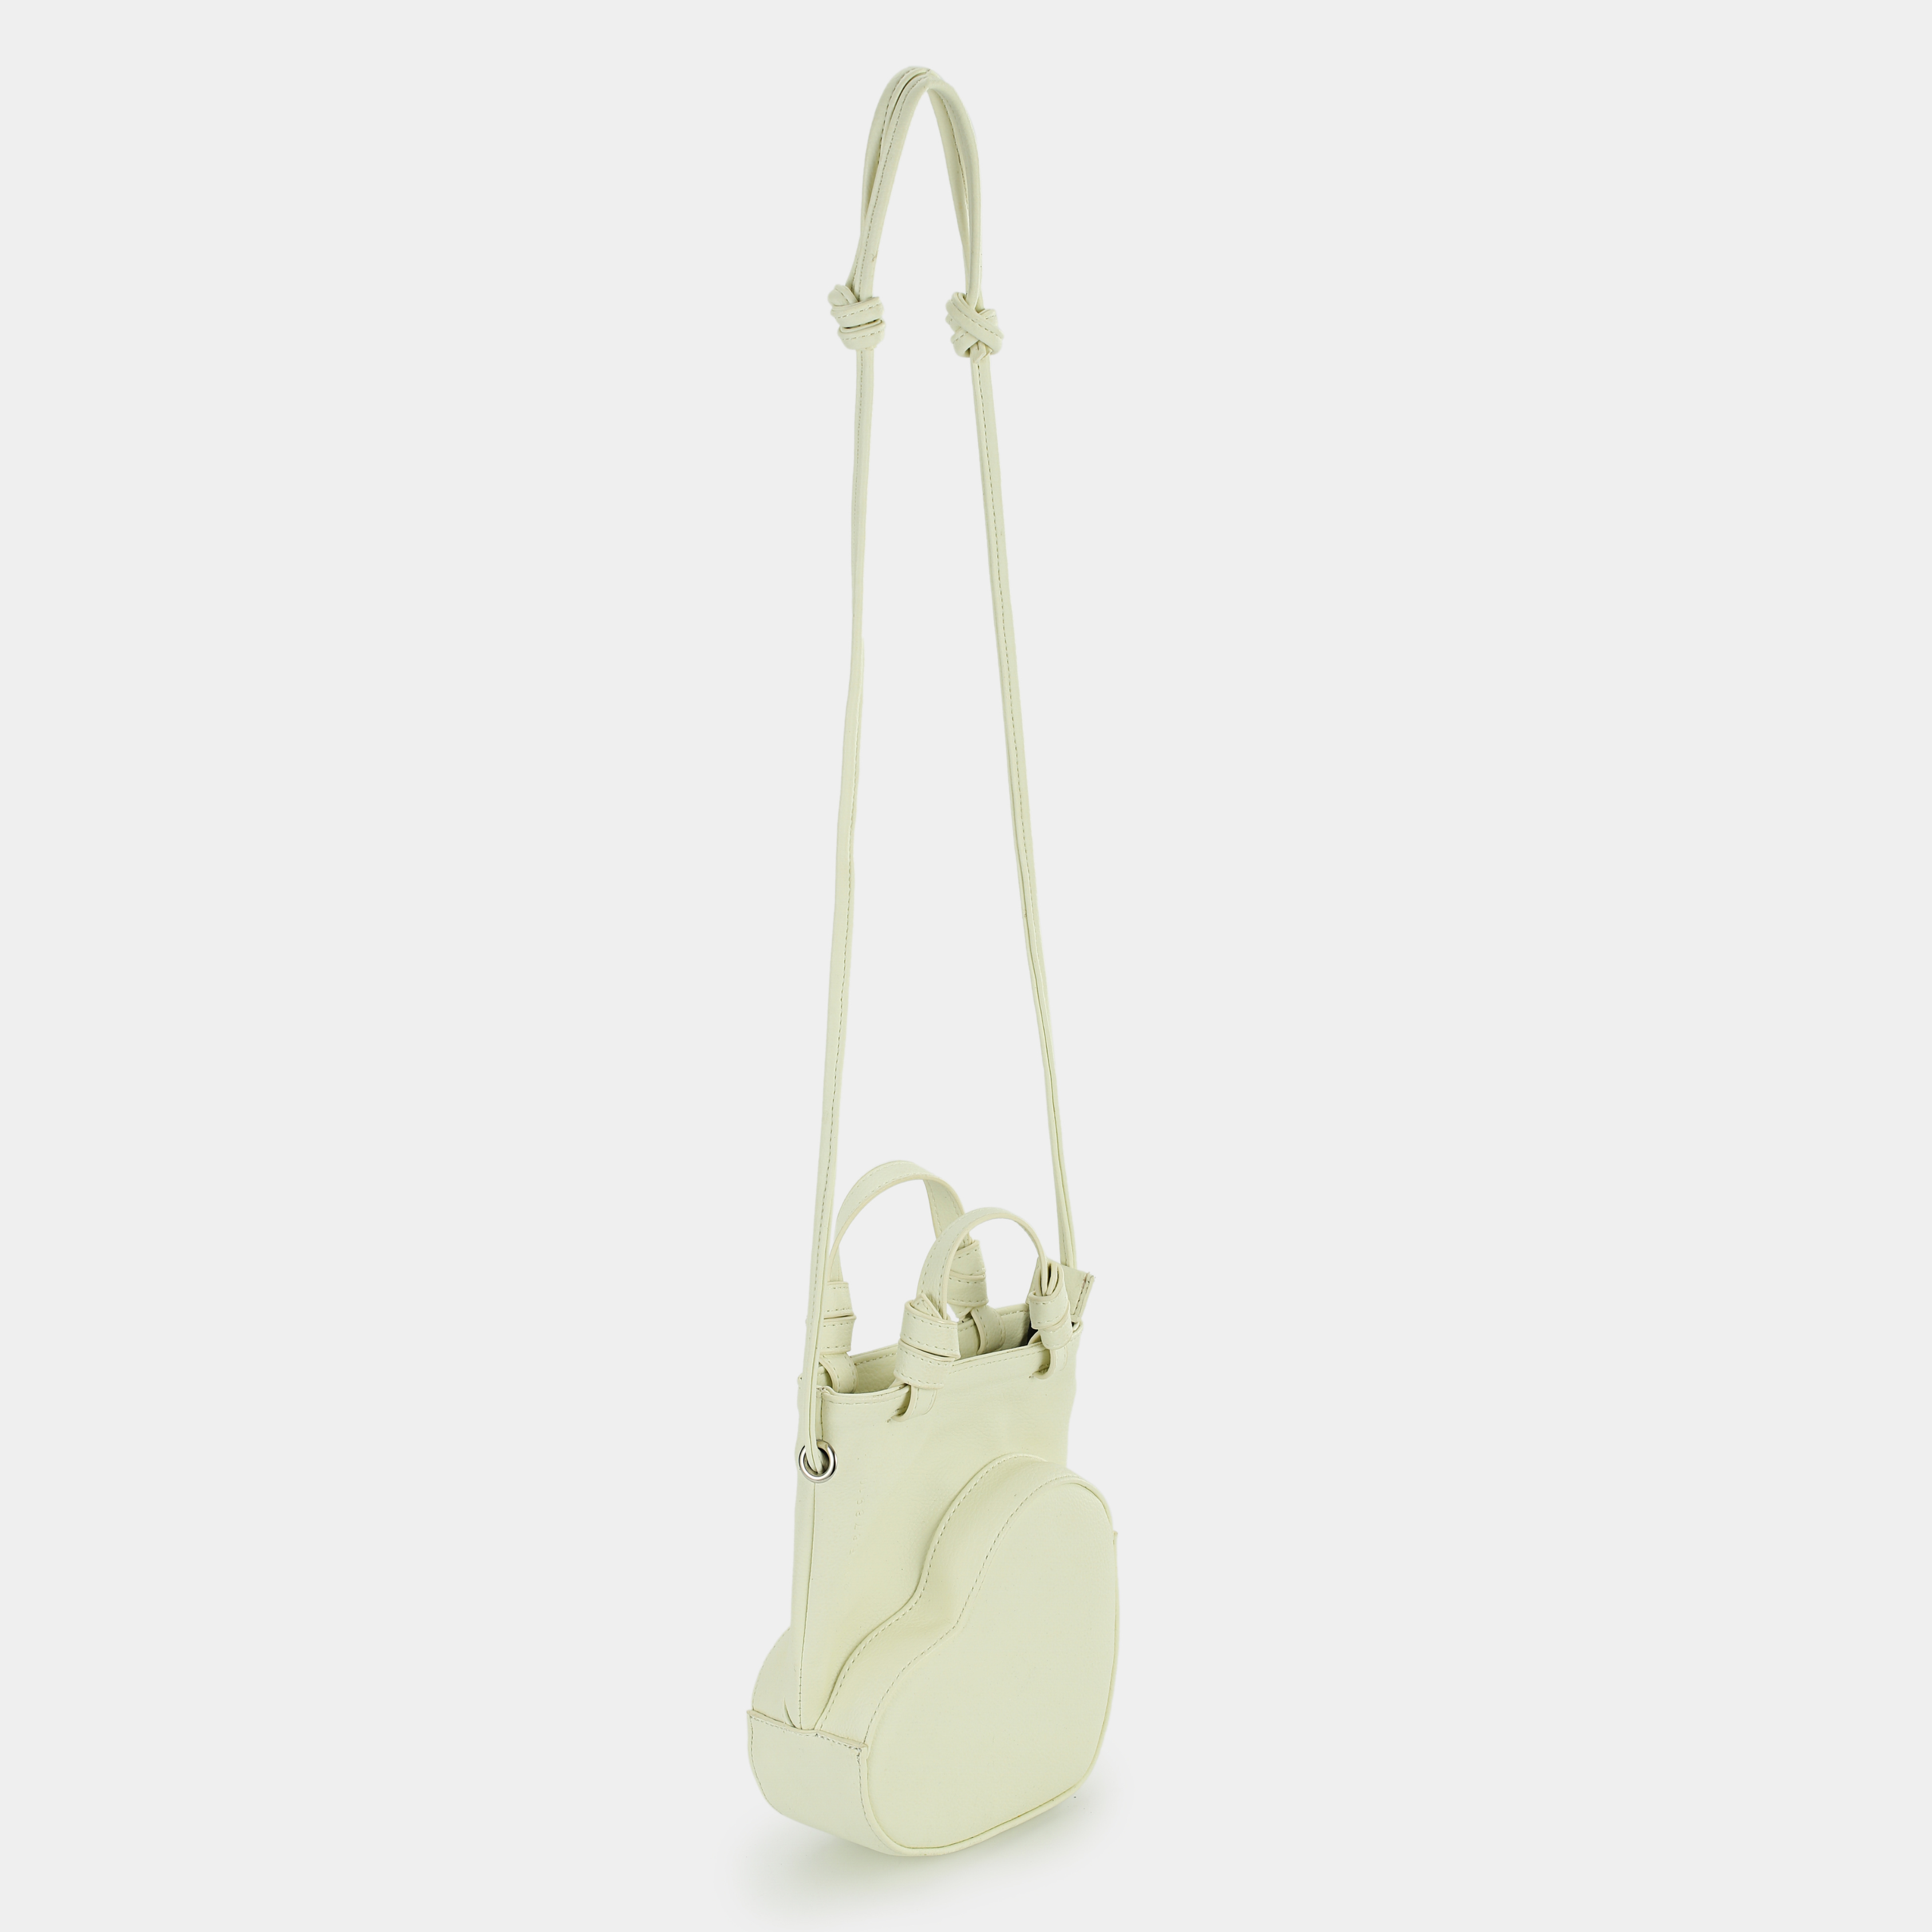 Growing Heart handbag in cream white color